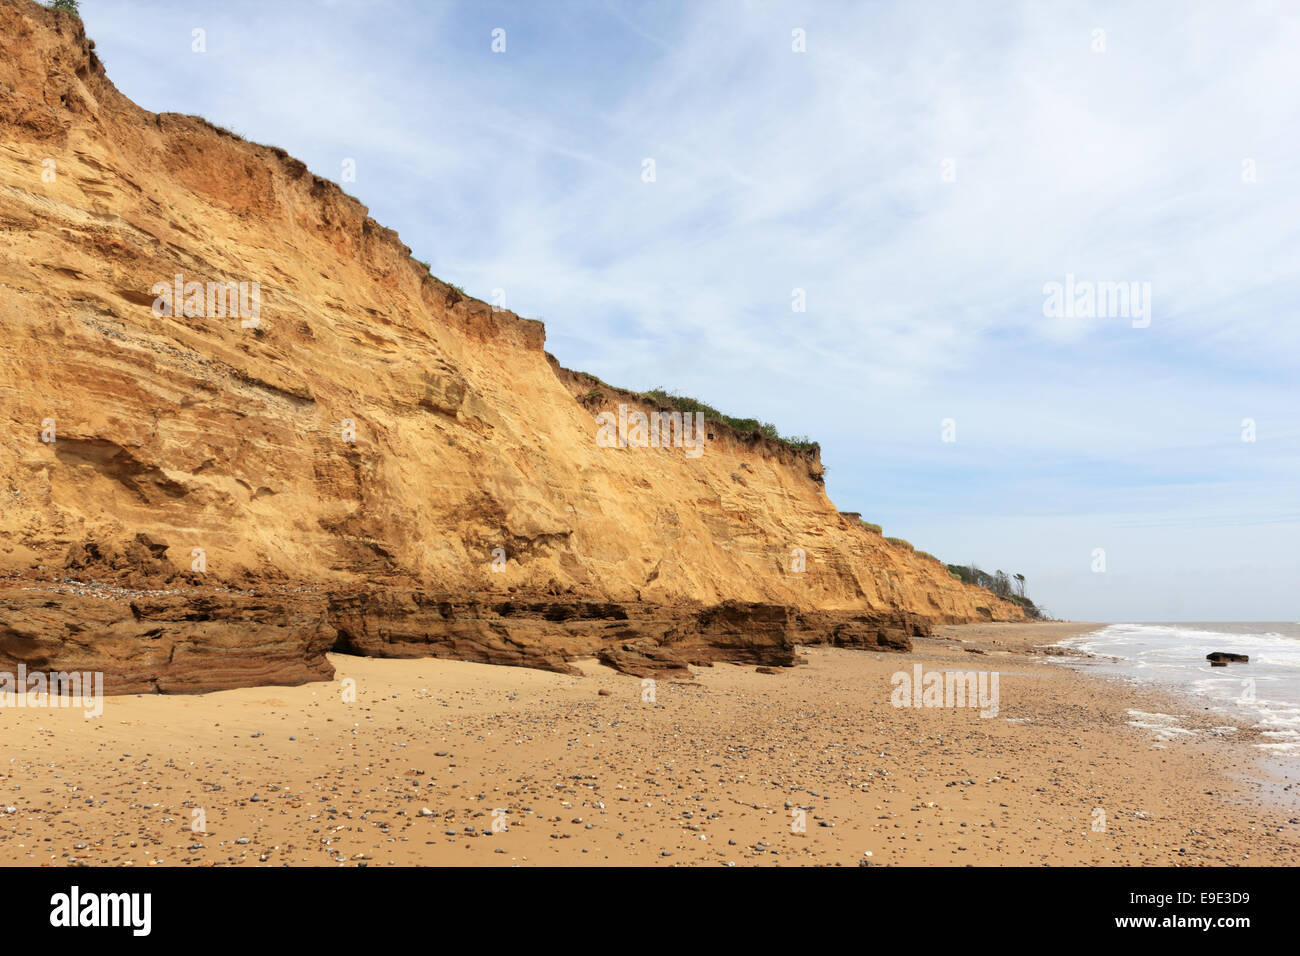 Sandstone cliffs subject to coastal erosion between Benacre and Covehithe, Suffolk, England, UK Stock Photo